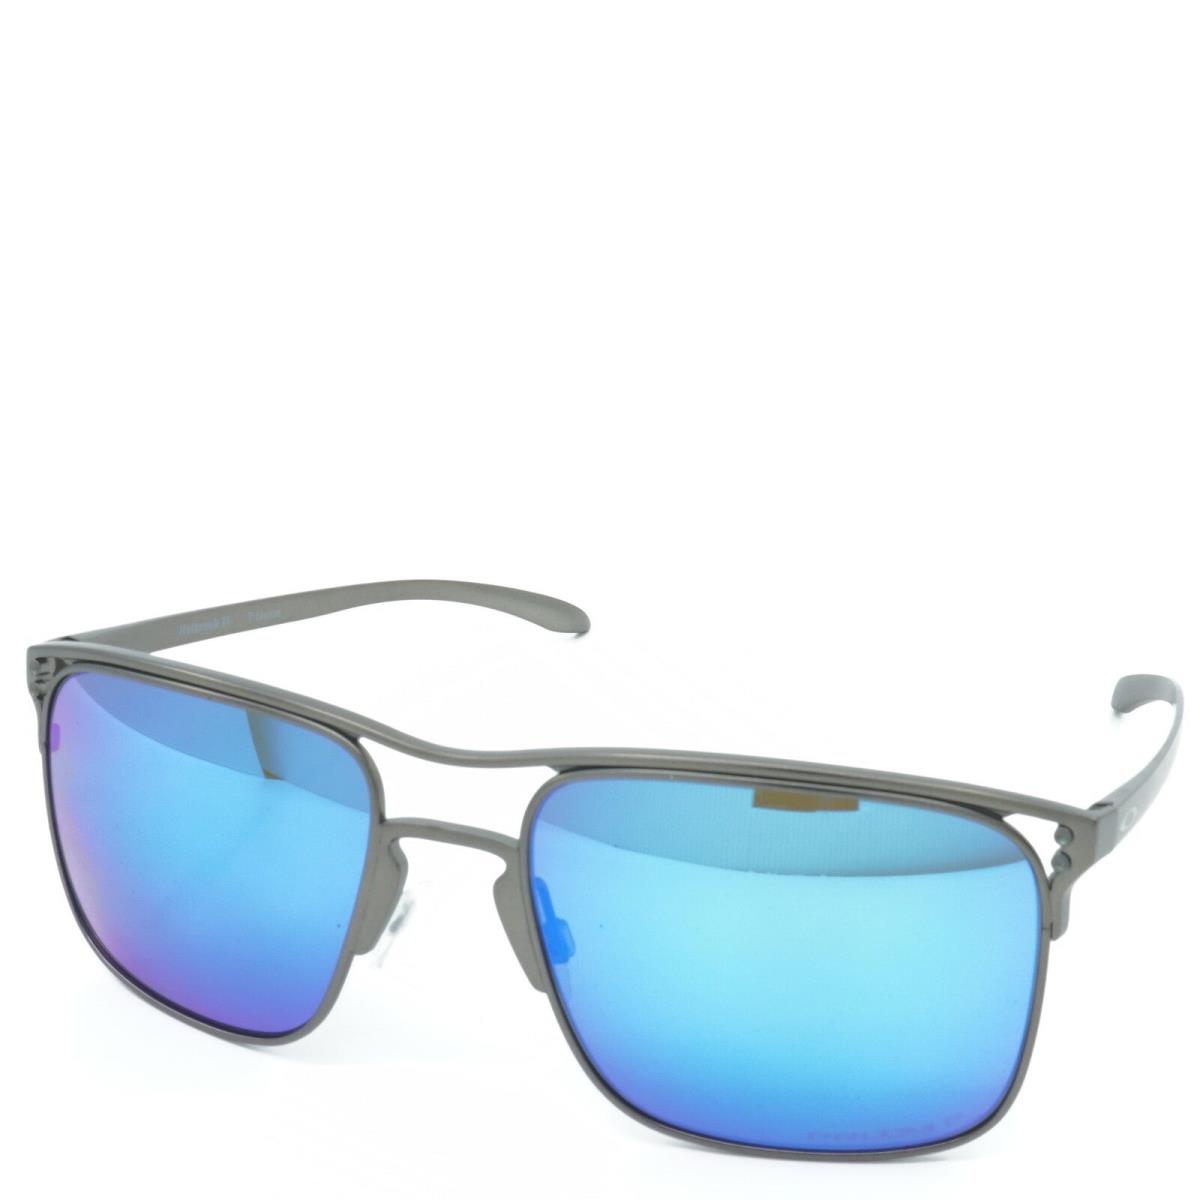 OO6048-04 Mens Oakley Holbrook TI Polarized Sunglasses - Frame: Silver, Lens: Blue